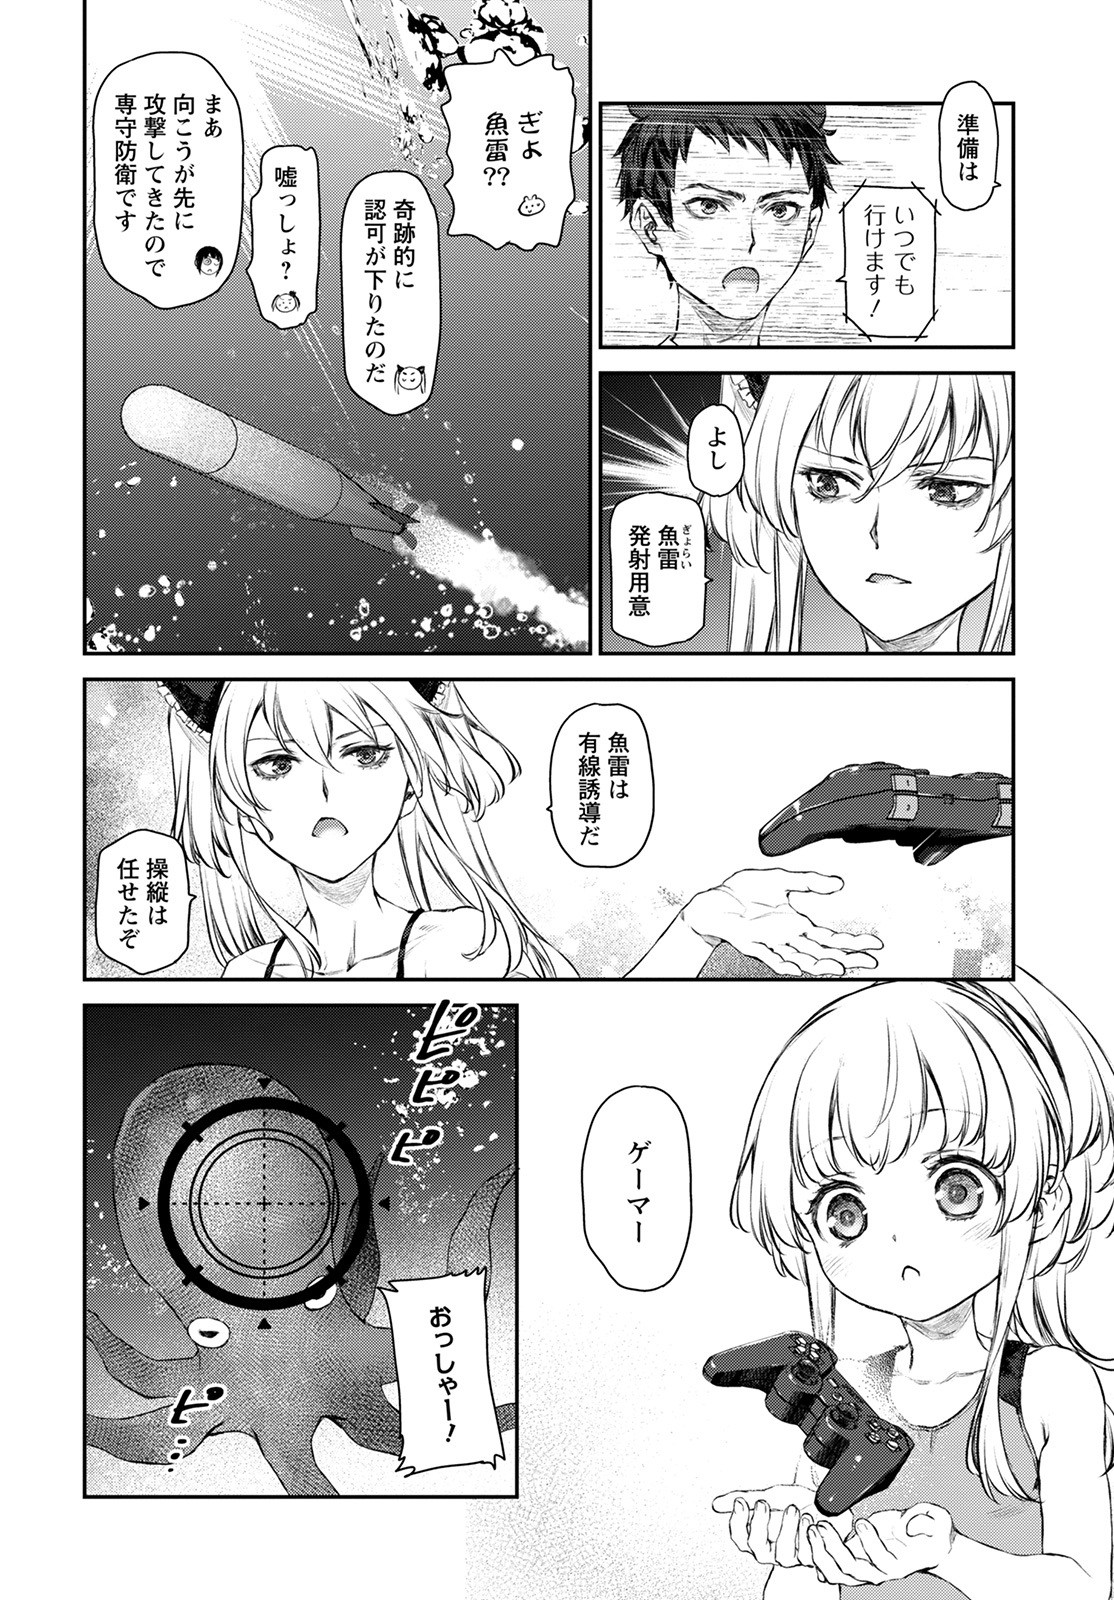 Uchi no Maid ga Uzasugiru! - Chapter 51 - Page 22